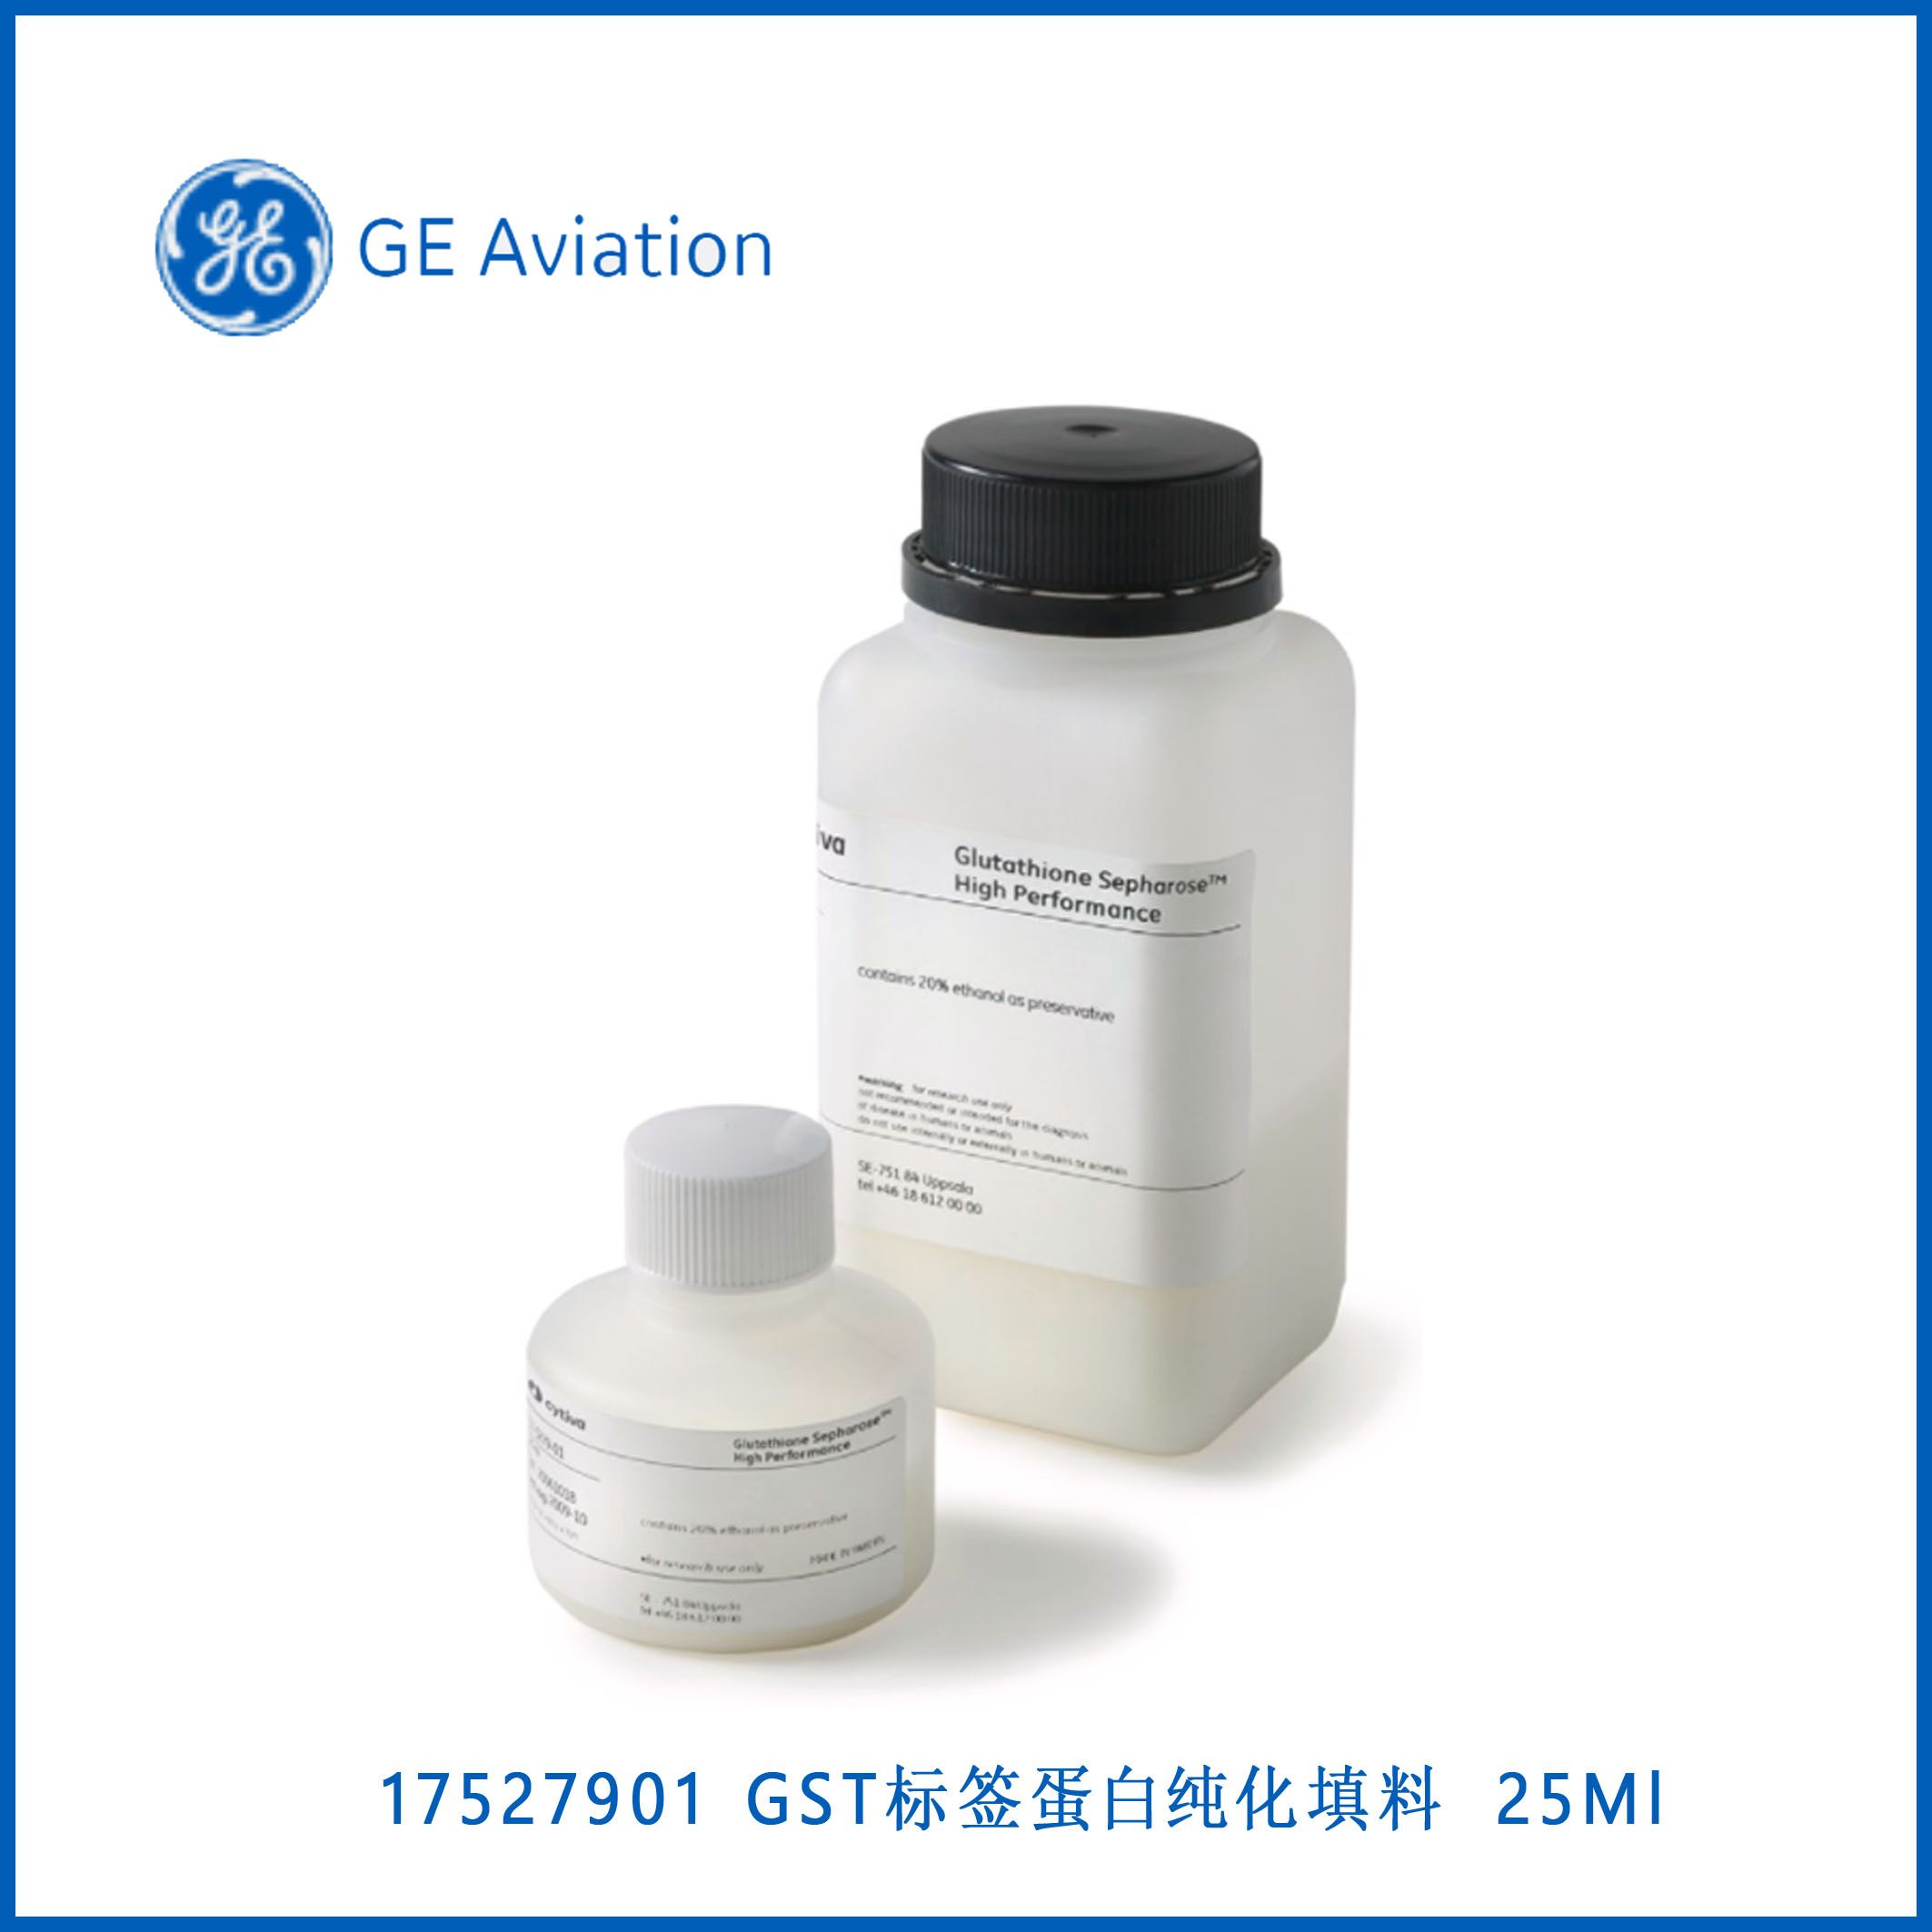 GE17527901 Glutathione Sepharose® High Performance, 25Ml, GST 标签蛋白纯化填料，现货